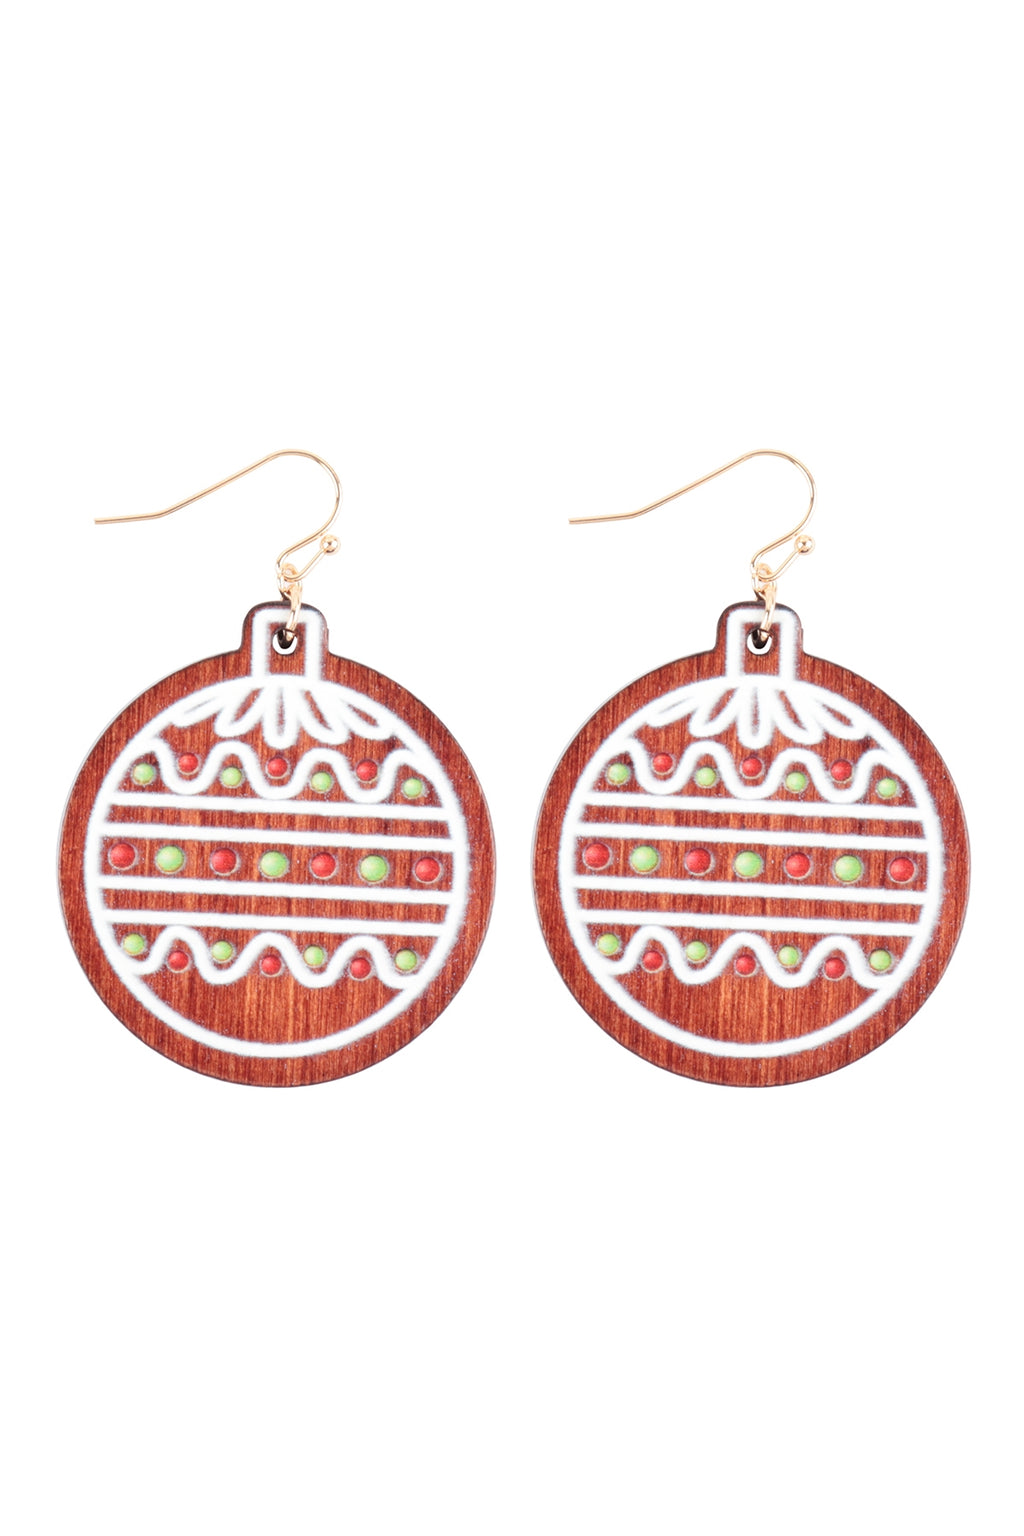 1.75" Wood Christmas Ornament Ball Hook Earrings - Pack of 6